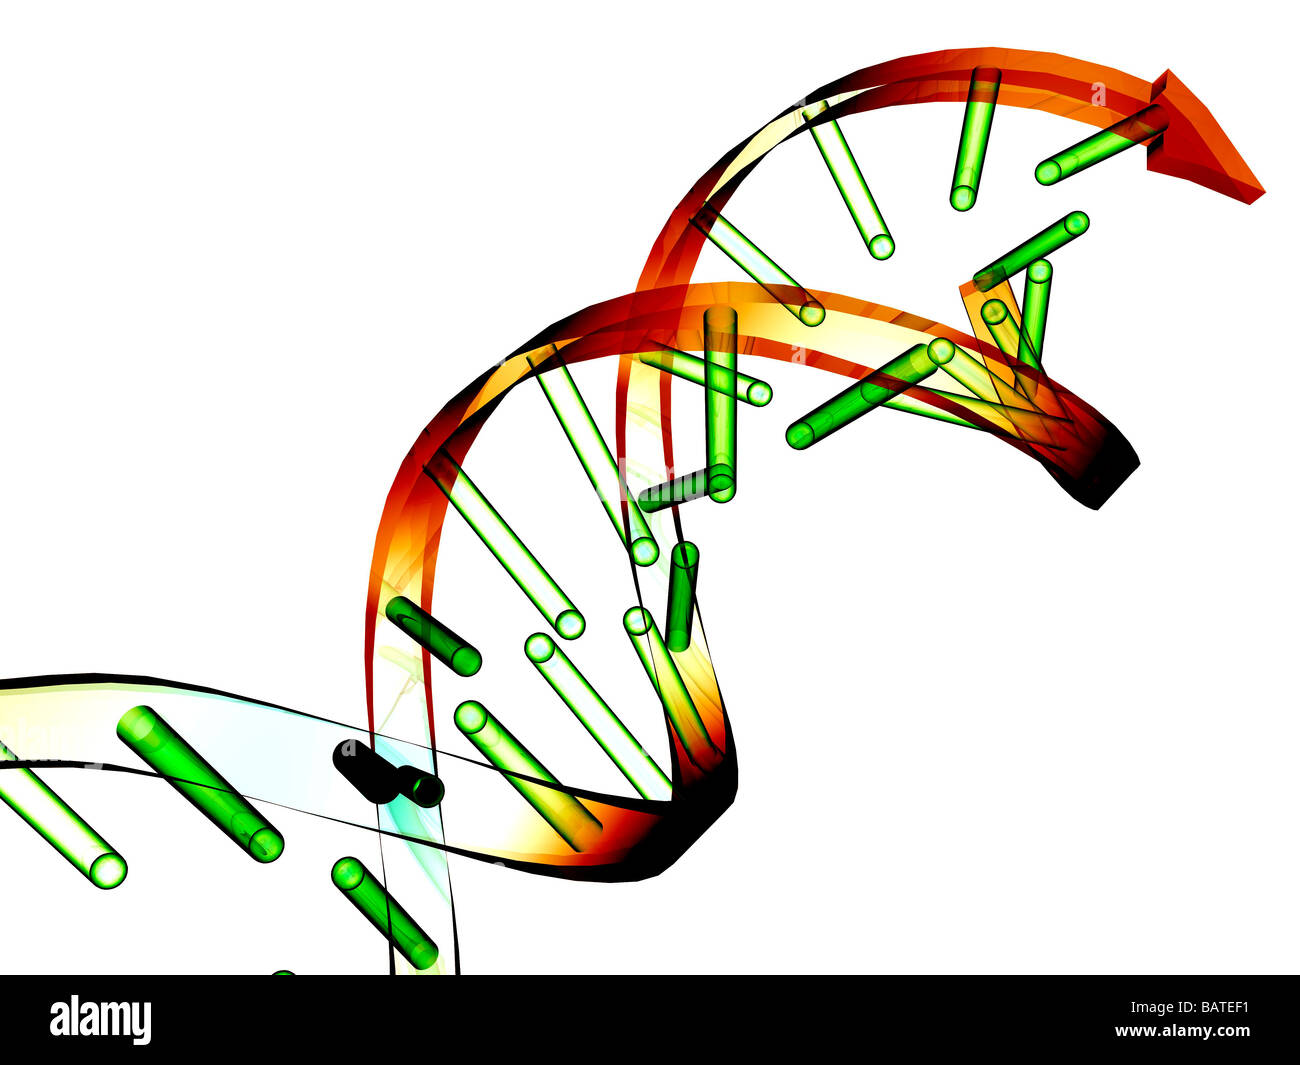 Unzipped DNA molecule, conceptual computer artwork. Stock Photo